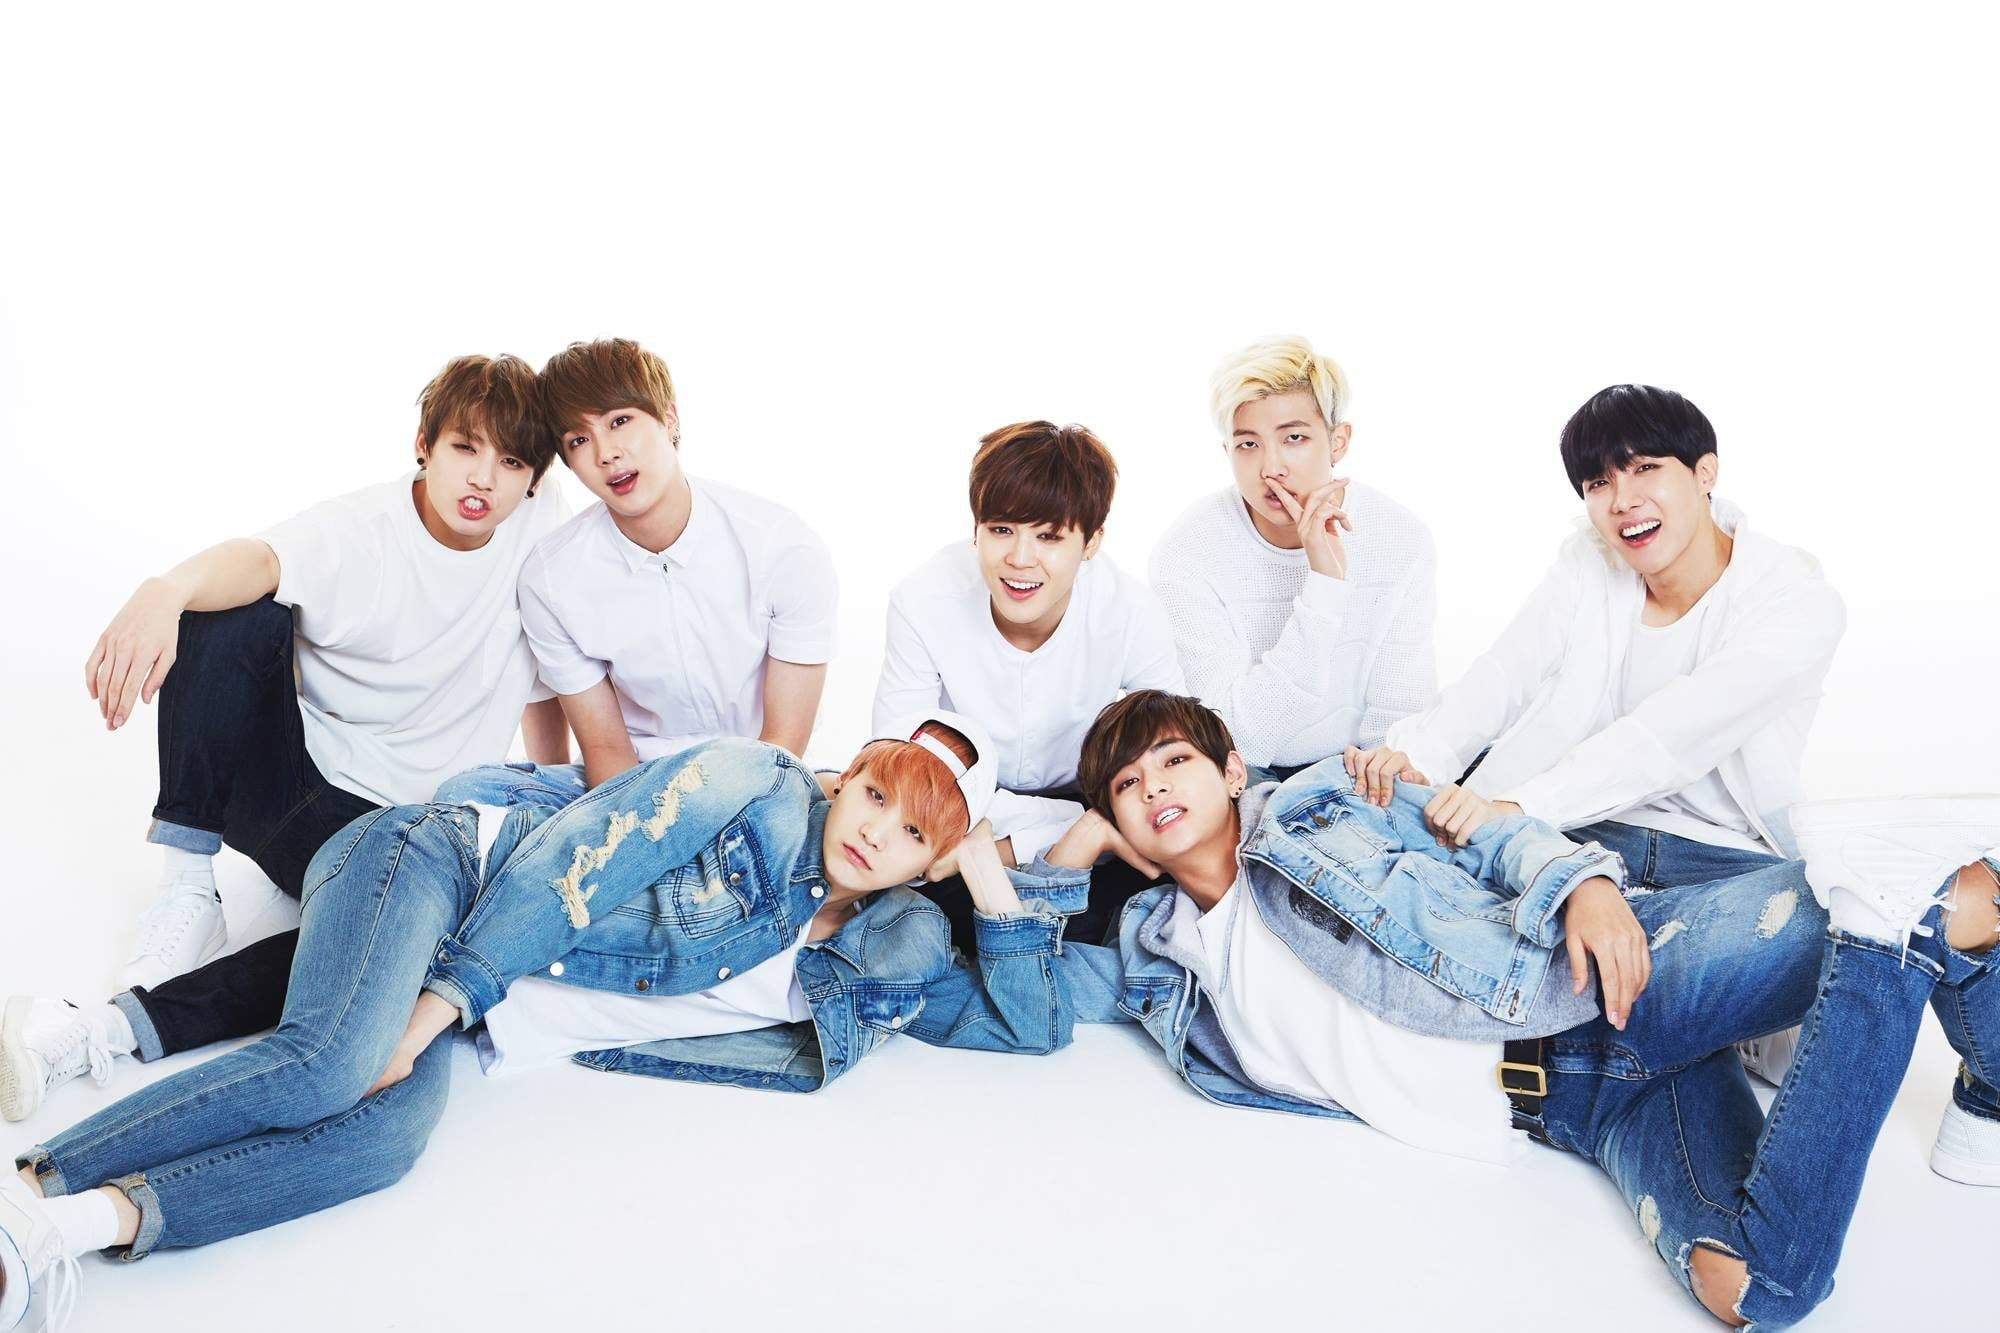 BTS wallpaper, J - Hope, V, Jin, Suga, RM , Jimin, Jungkook, group of people